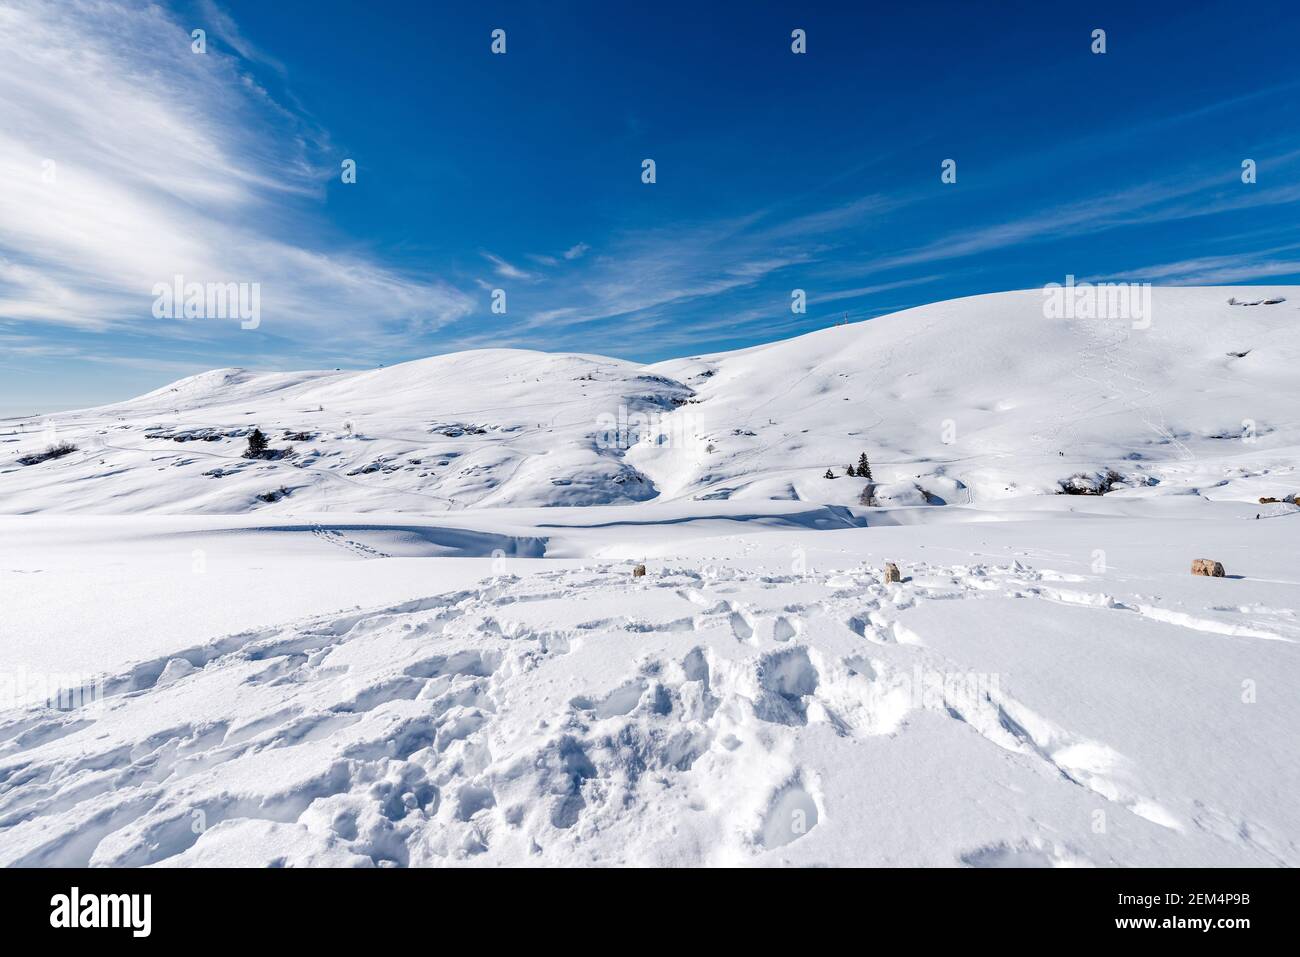 Landscape of the Lessinia Plateau in winter, Regional Natural Park, near Malga San Giorgio, ski resort in Verona province, Veneto, Italy, Europe. Stock Photo